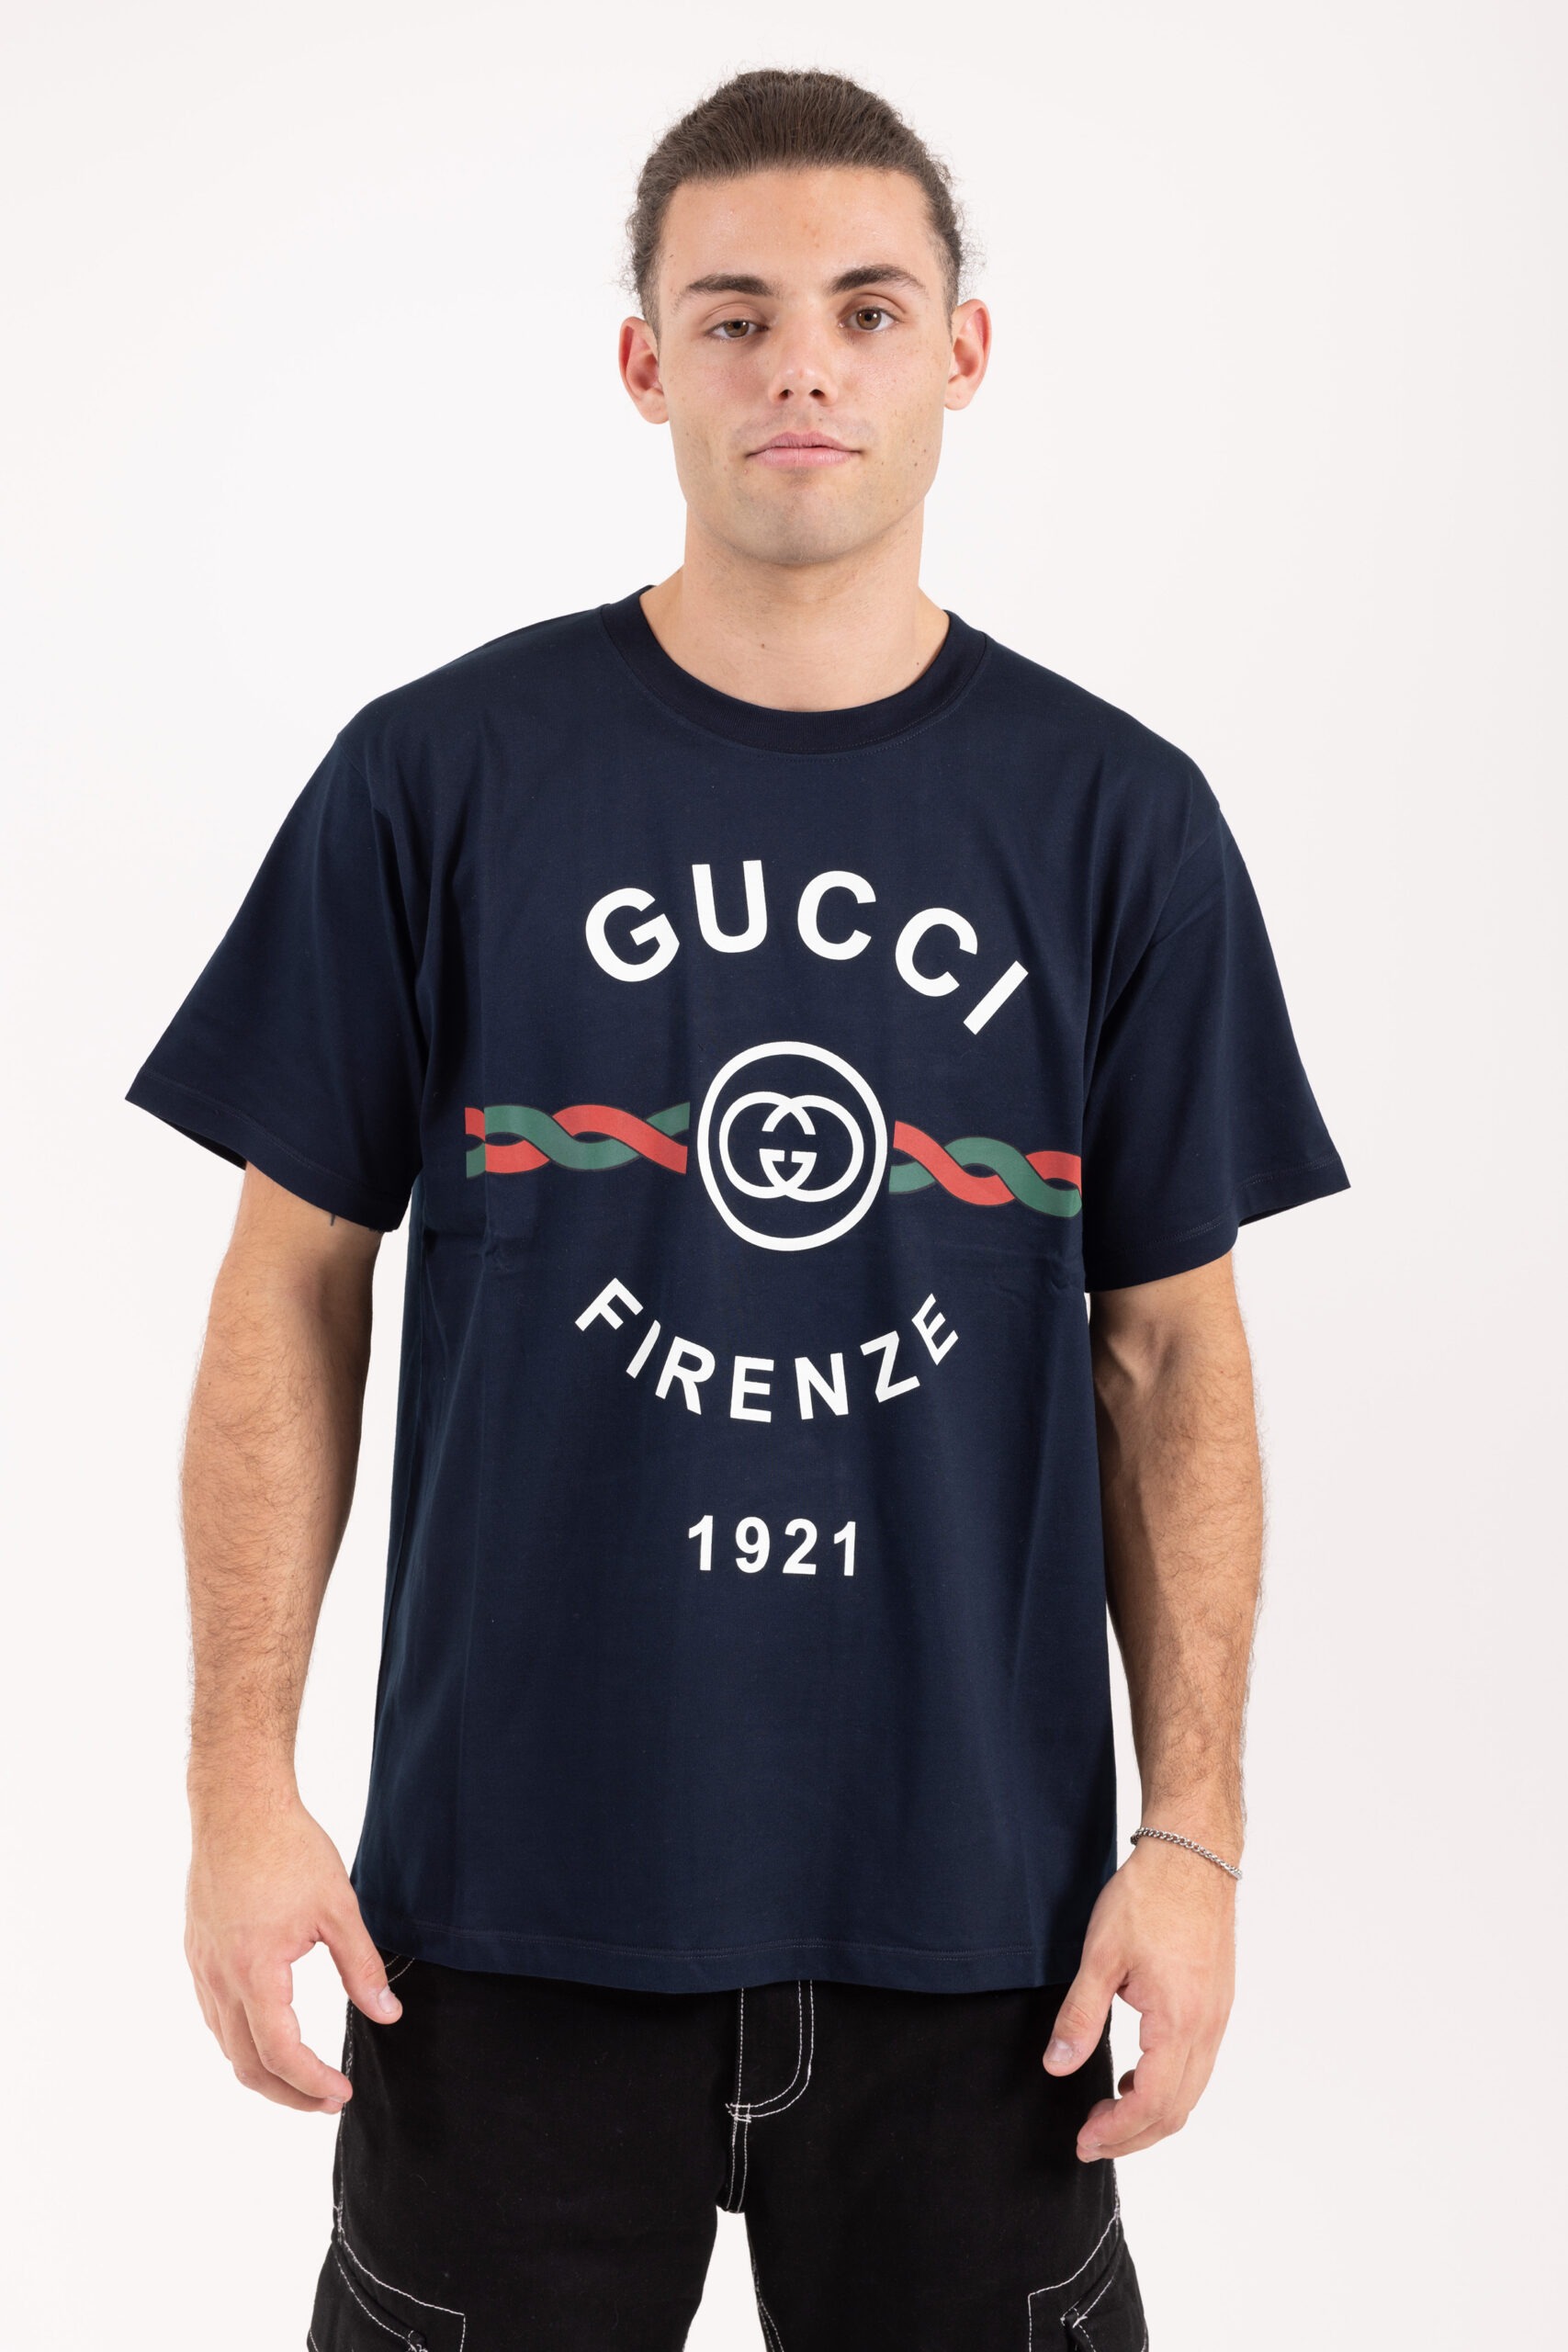 Gucci T Shirt Con Stampa Firenze 1921 nera vista frontale indossata